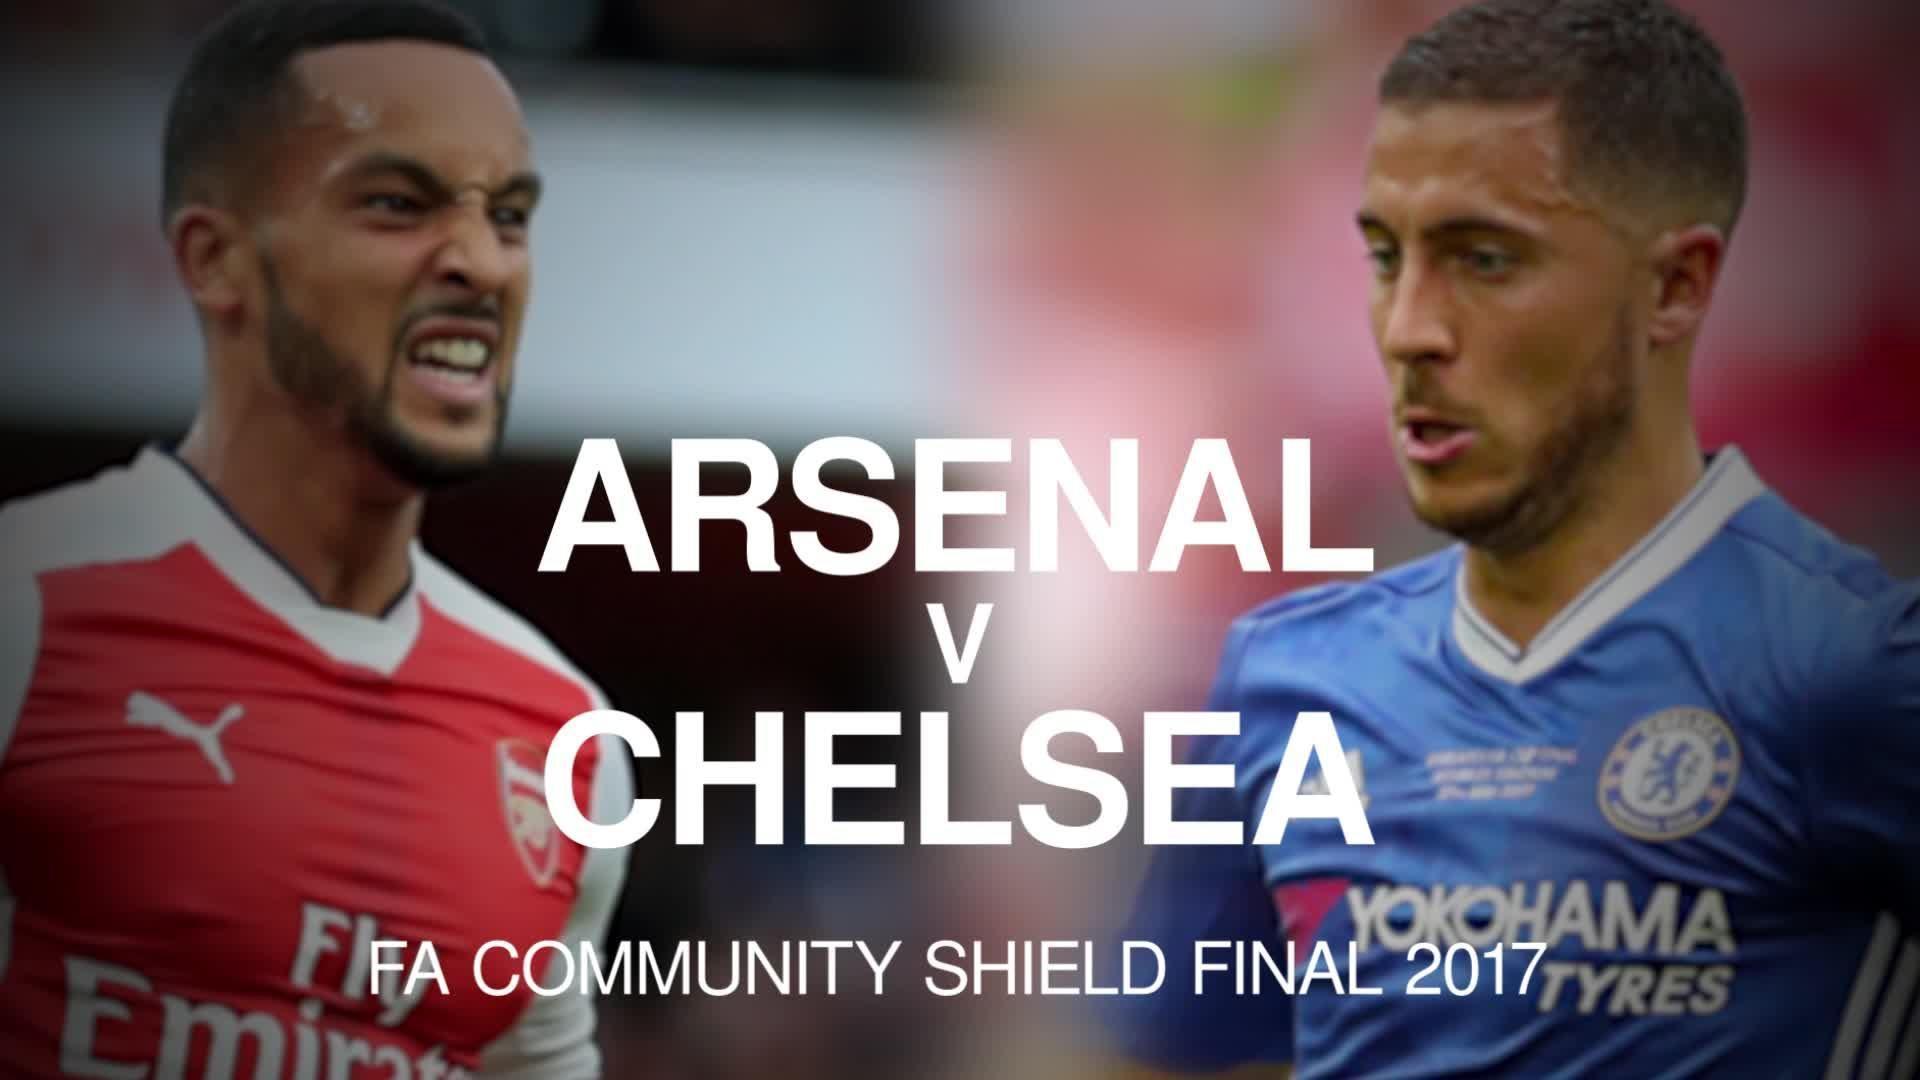 Arsenal vs Chelsea, Community Shield 2017 live: Online score